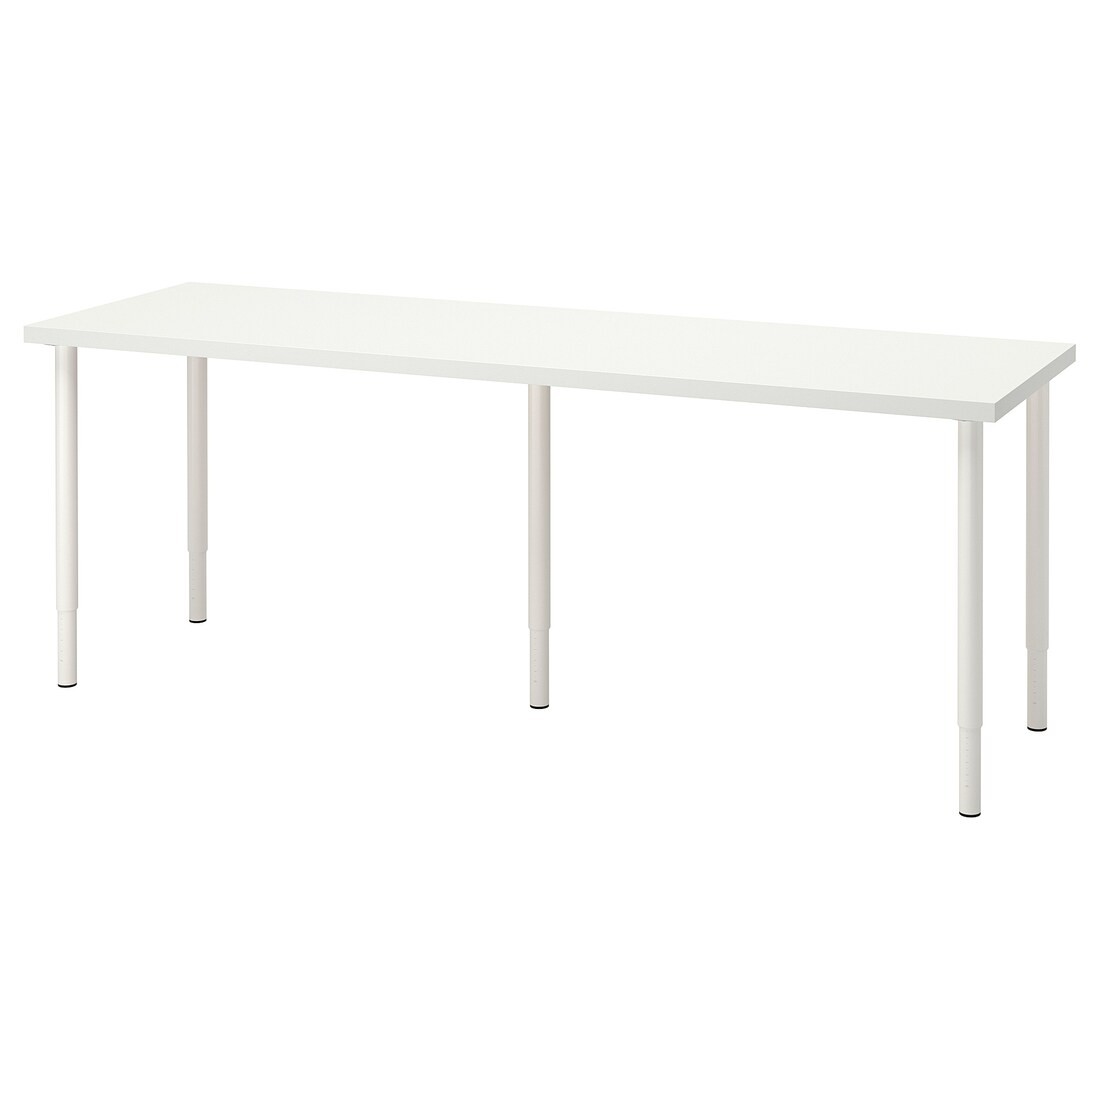 IKEA LAGKAPTEN ЛАГКАПТЕН / OLOV ОЛОВ Письменный стол, белый, 200x60 см 59417582 594.175.82